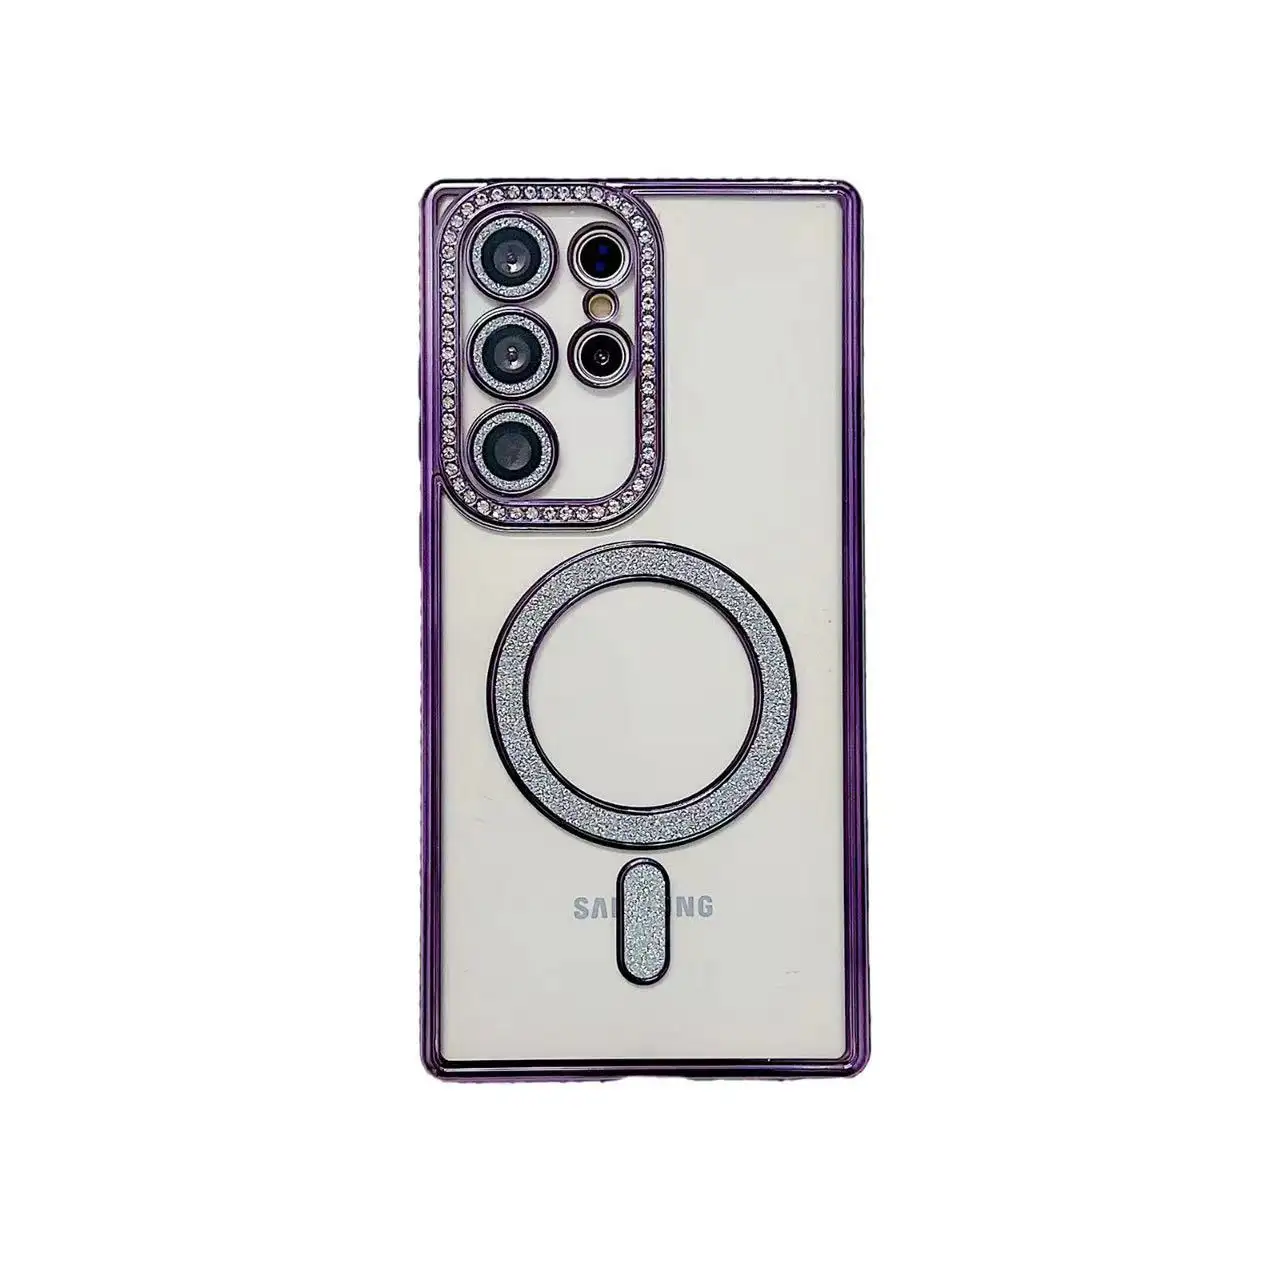 SShanhui יהלום כיסוי מצלמה מגנטי כיסוי לטלפון נייד עבור סמסונג אייפון x xs max מקרה